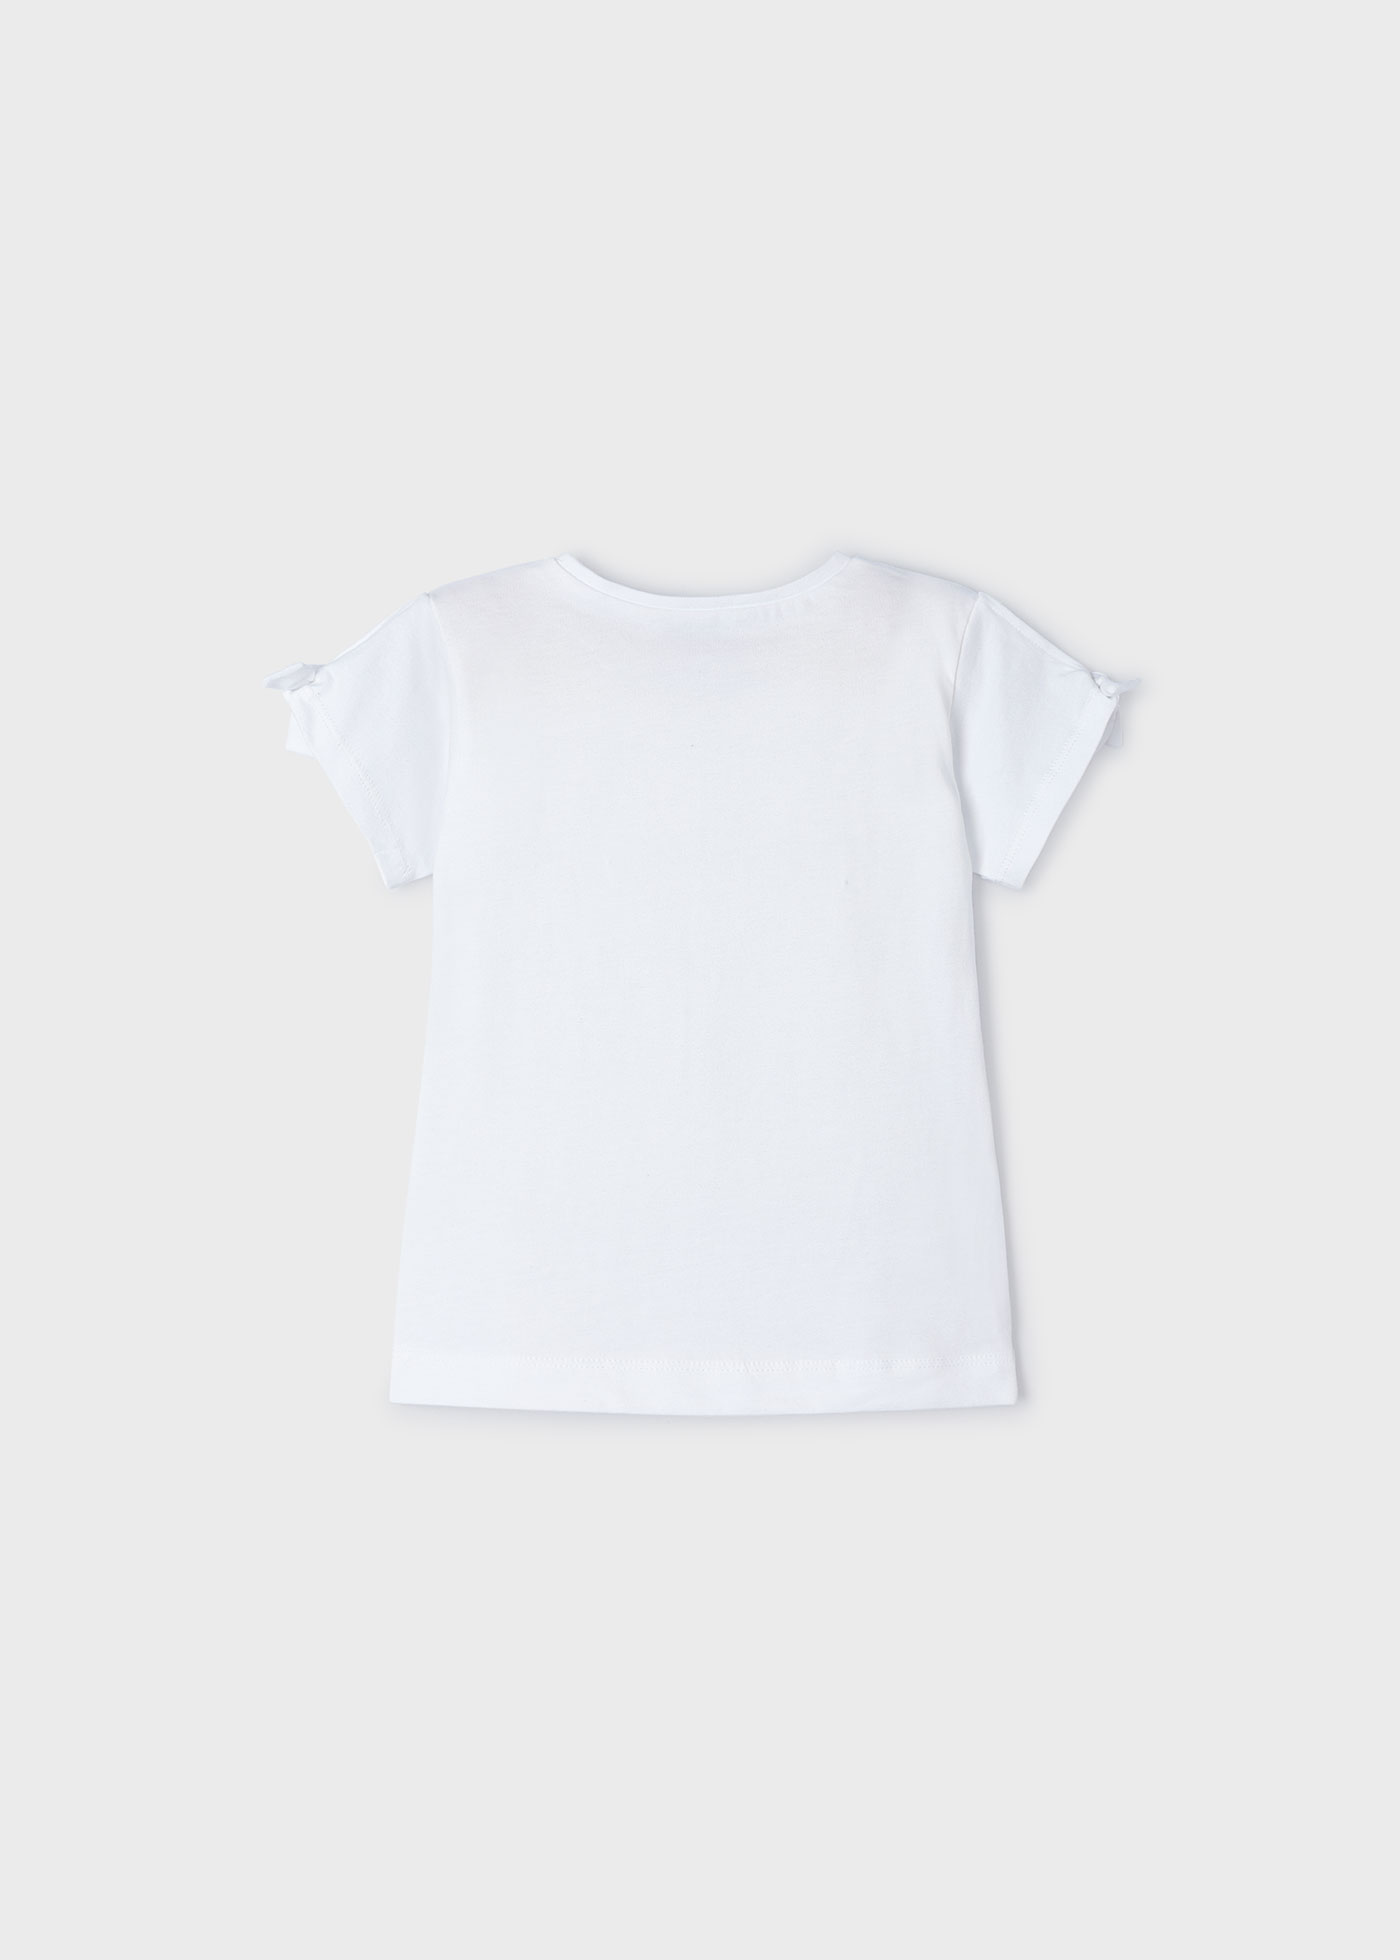 T-Shirt Printmotiv Better Cotton Mädchen